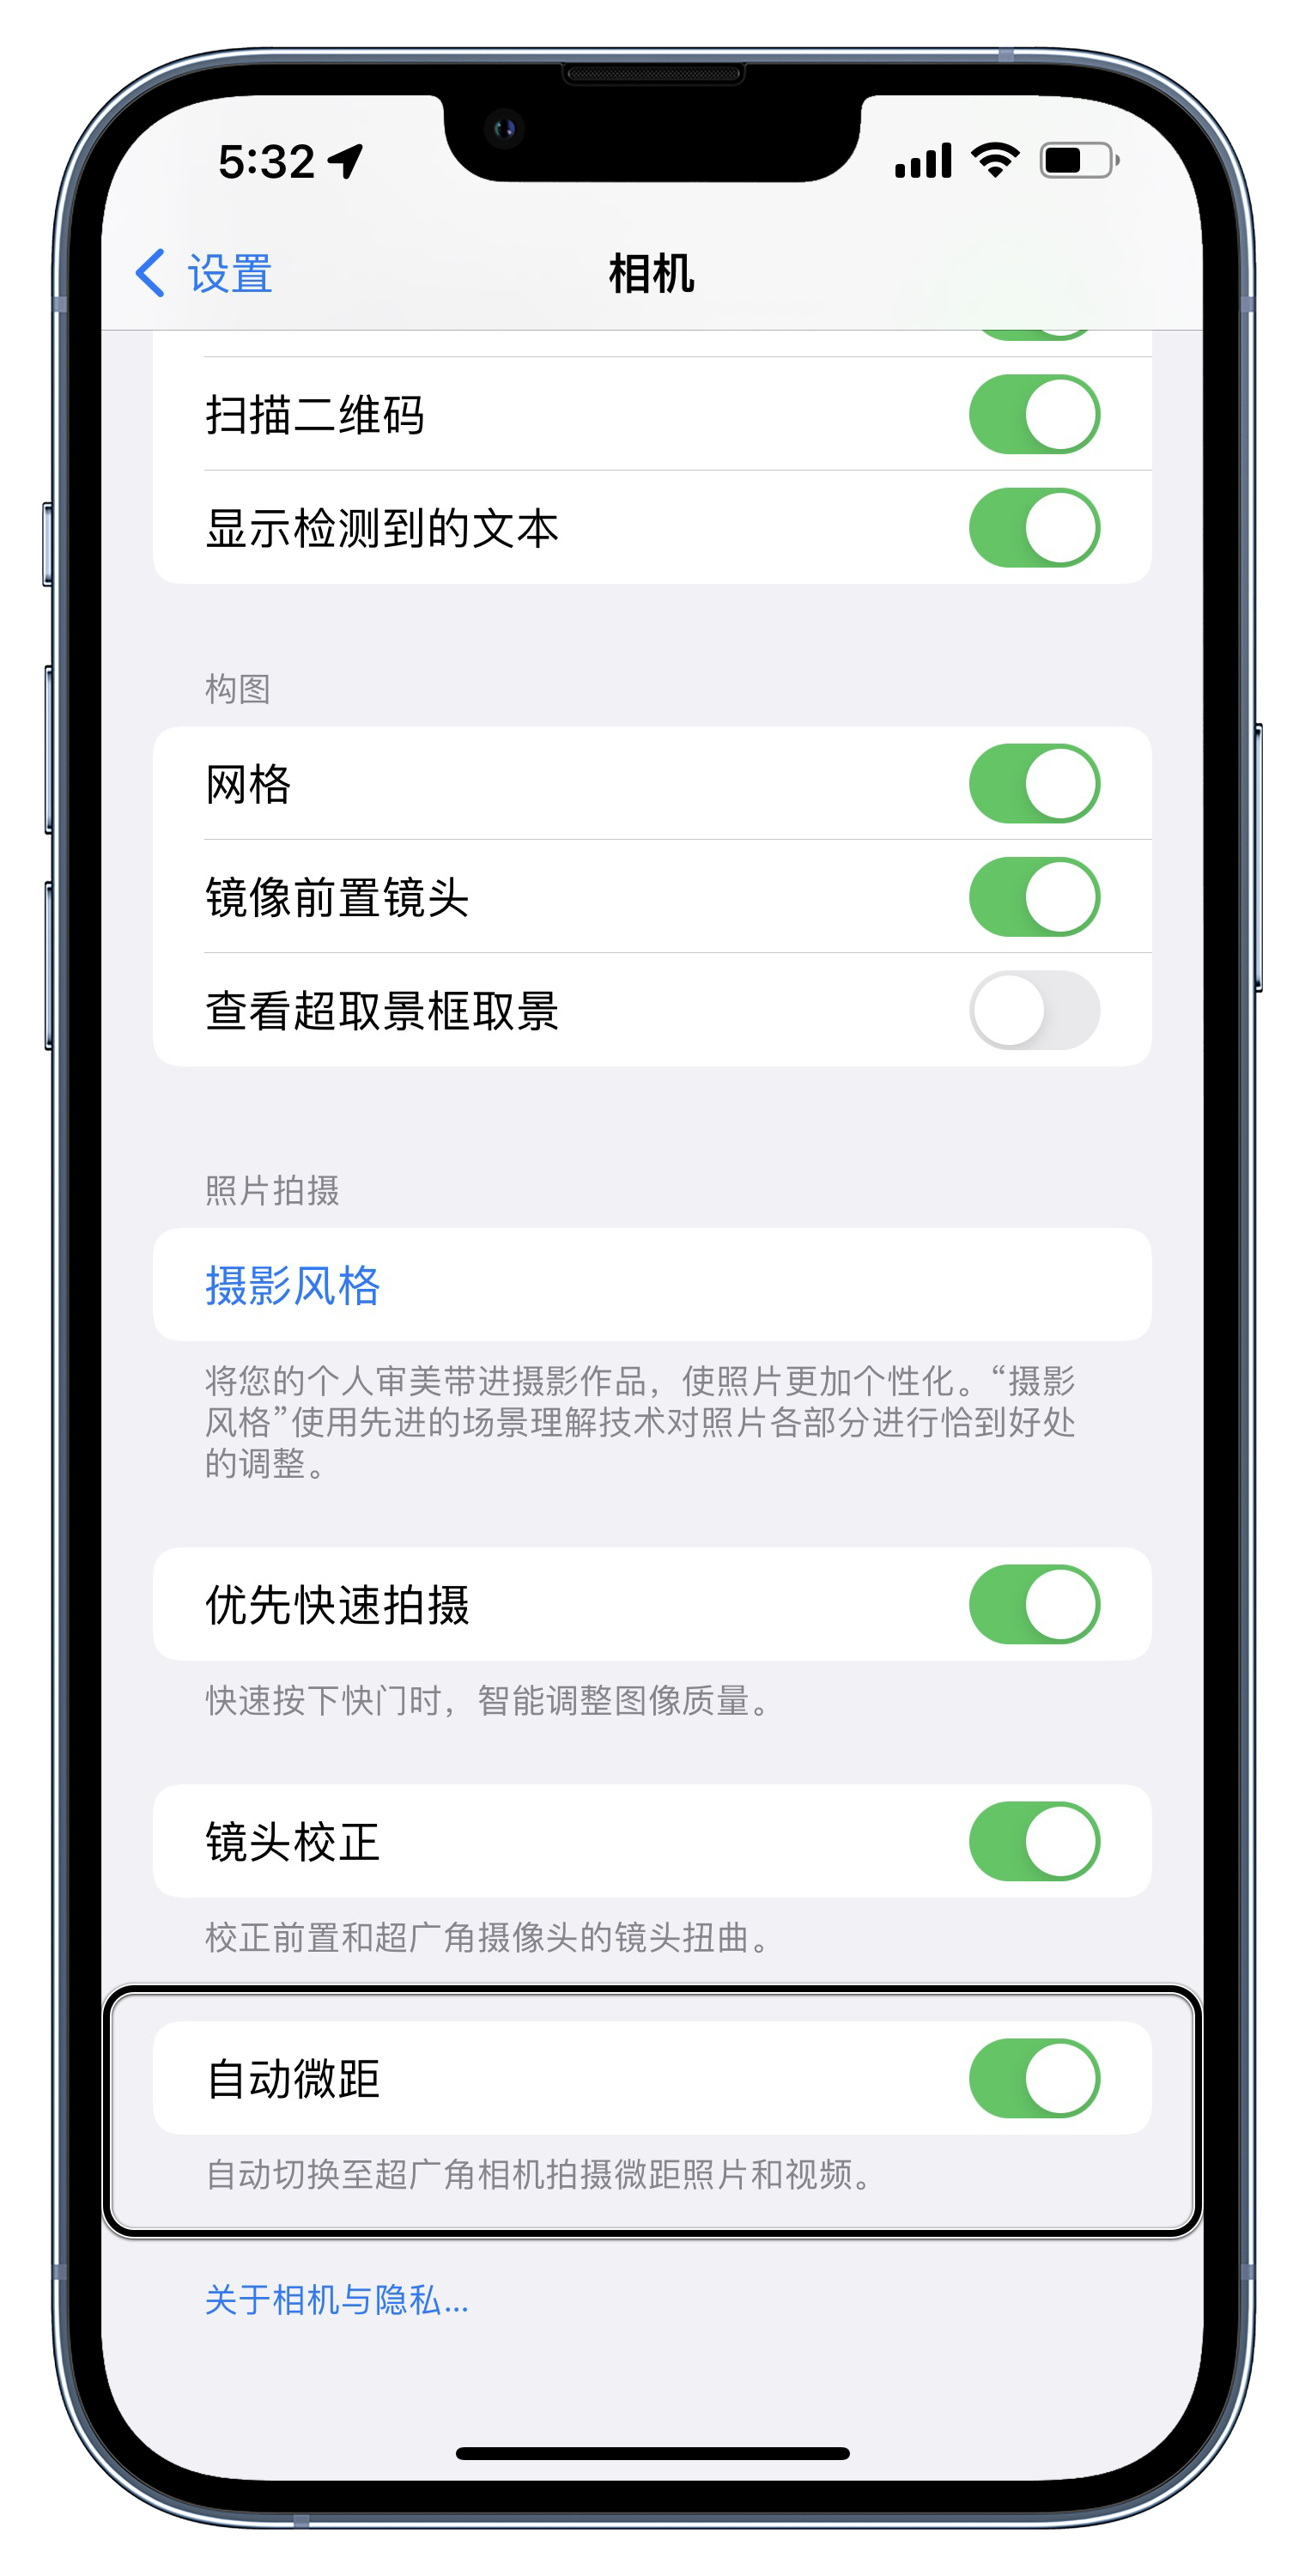 iOS 15.1 正式版来了，新功能总结与更新建议